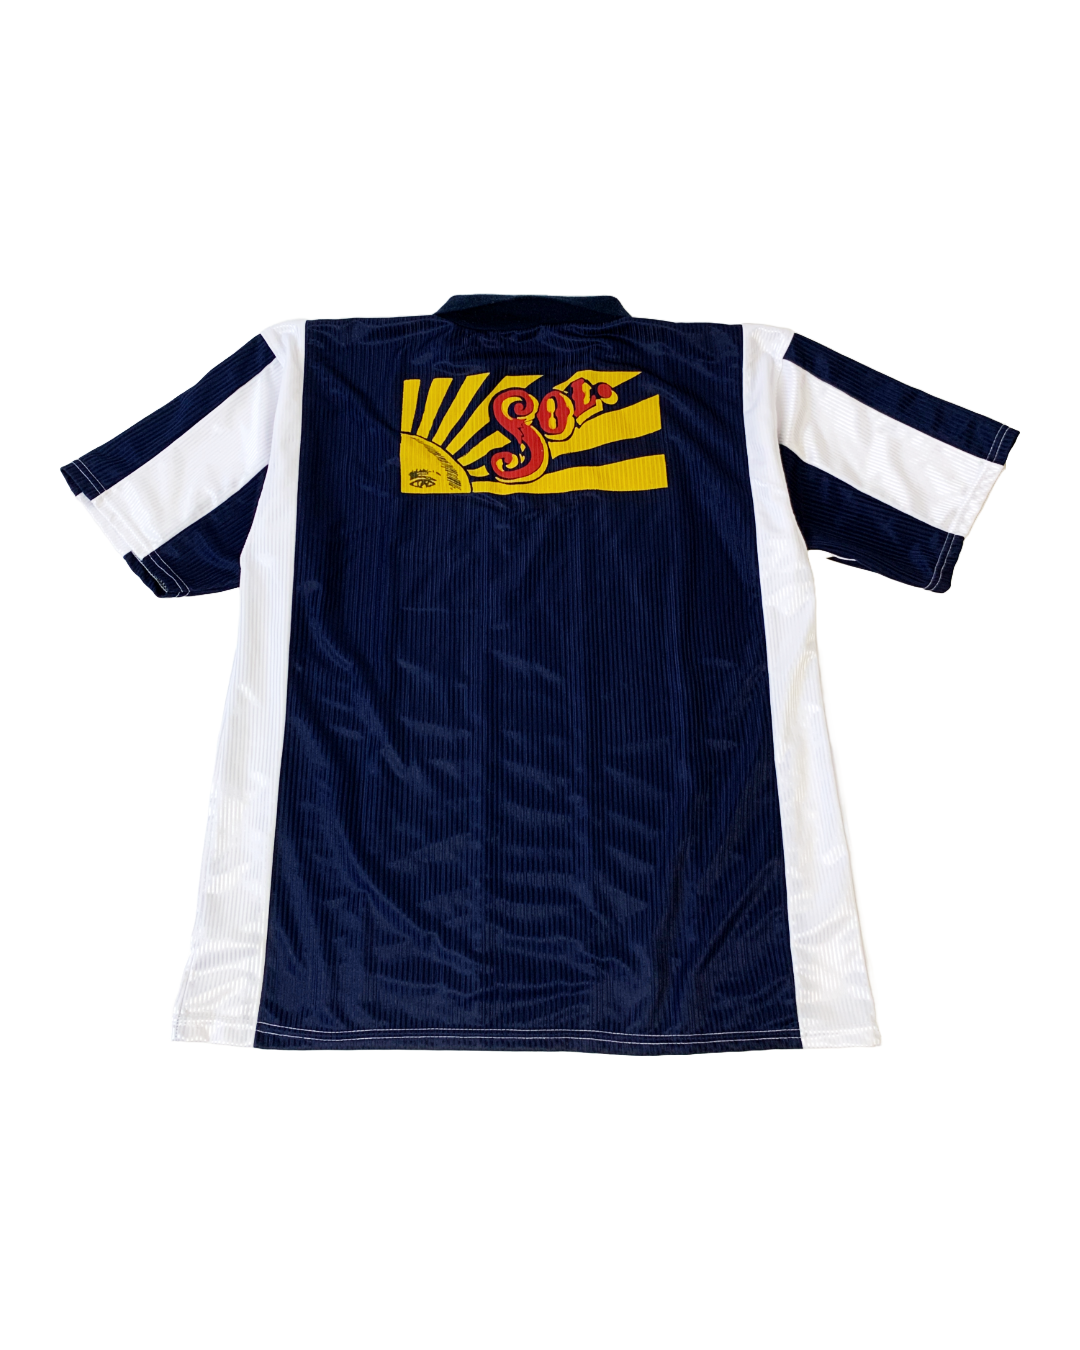 Pachuca 1999 Vintage Jersey - M